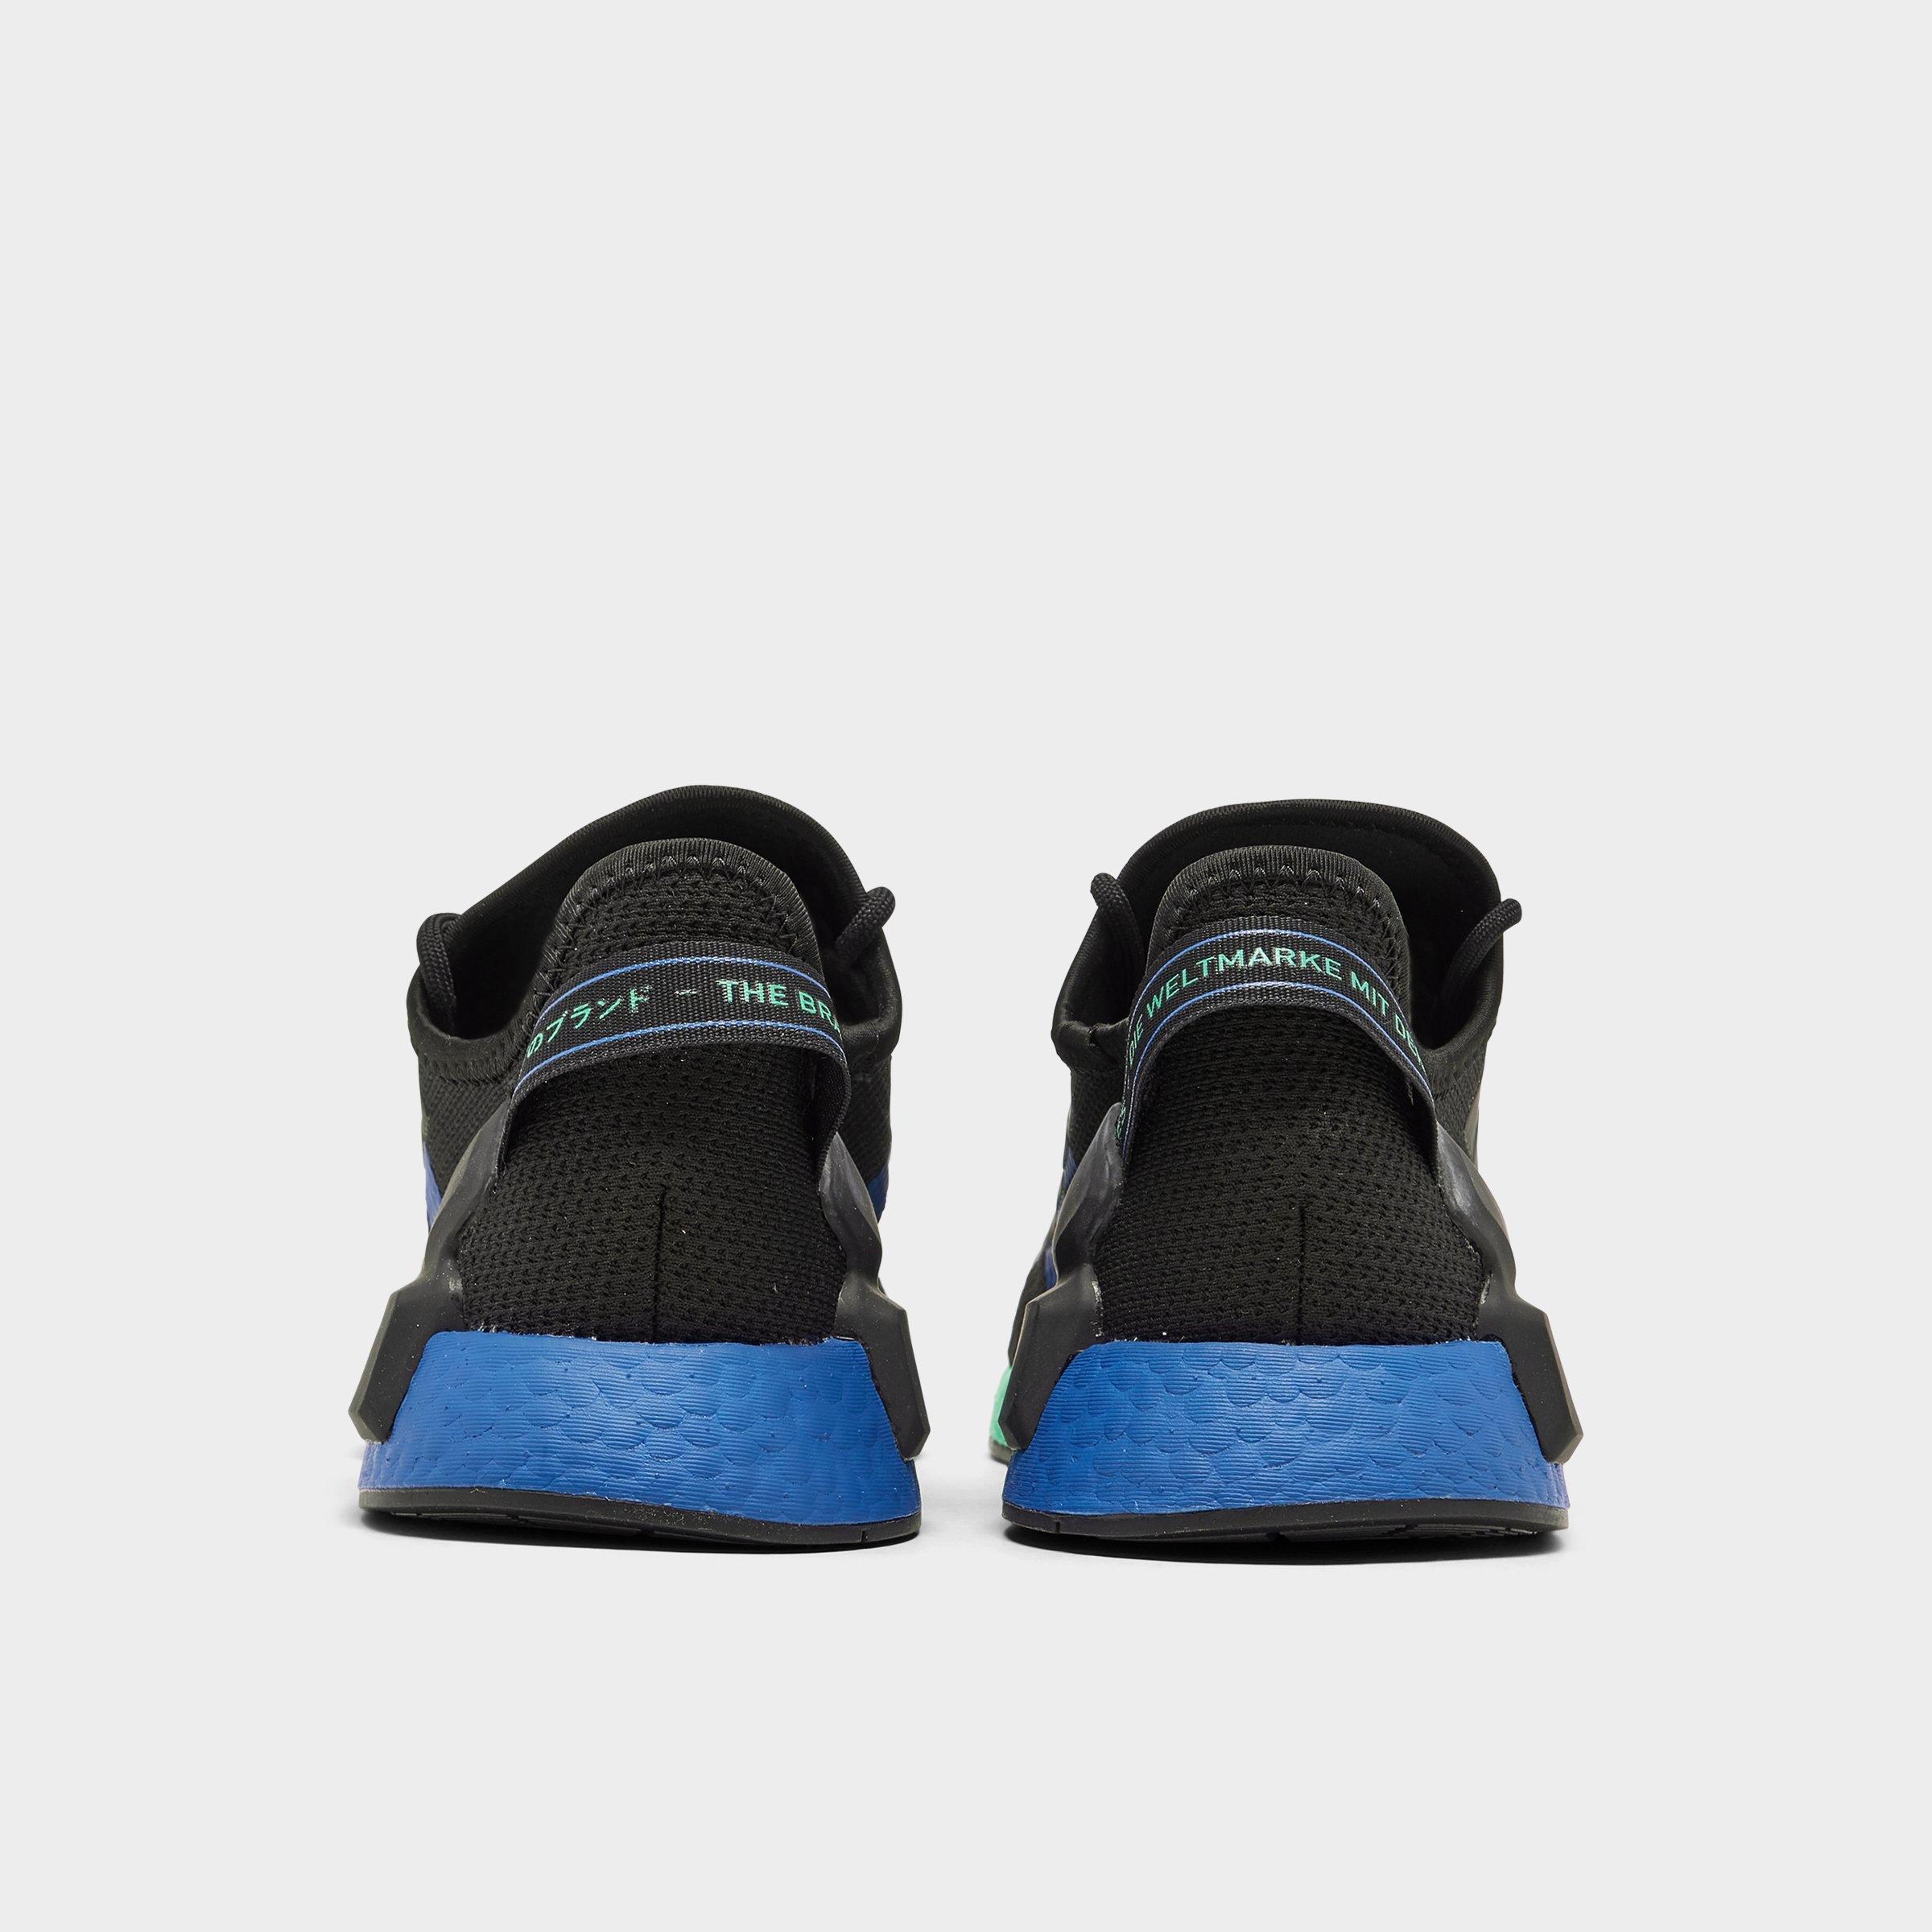 adidas nmd r1 black and blue